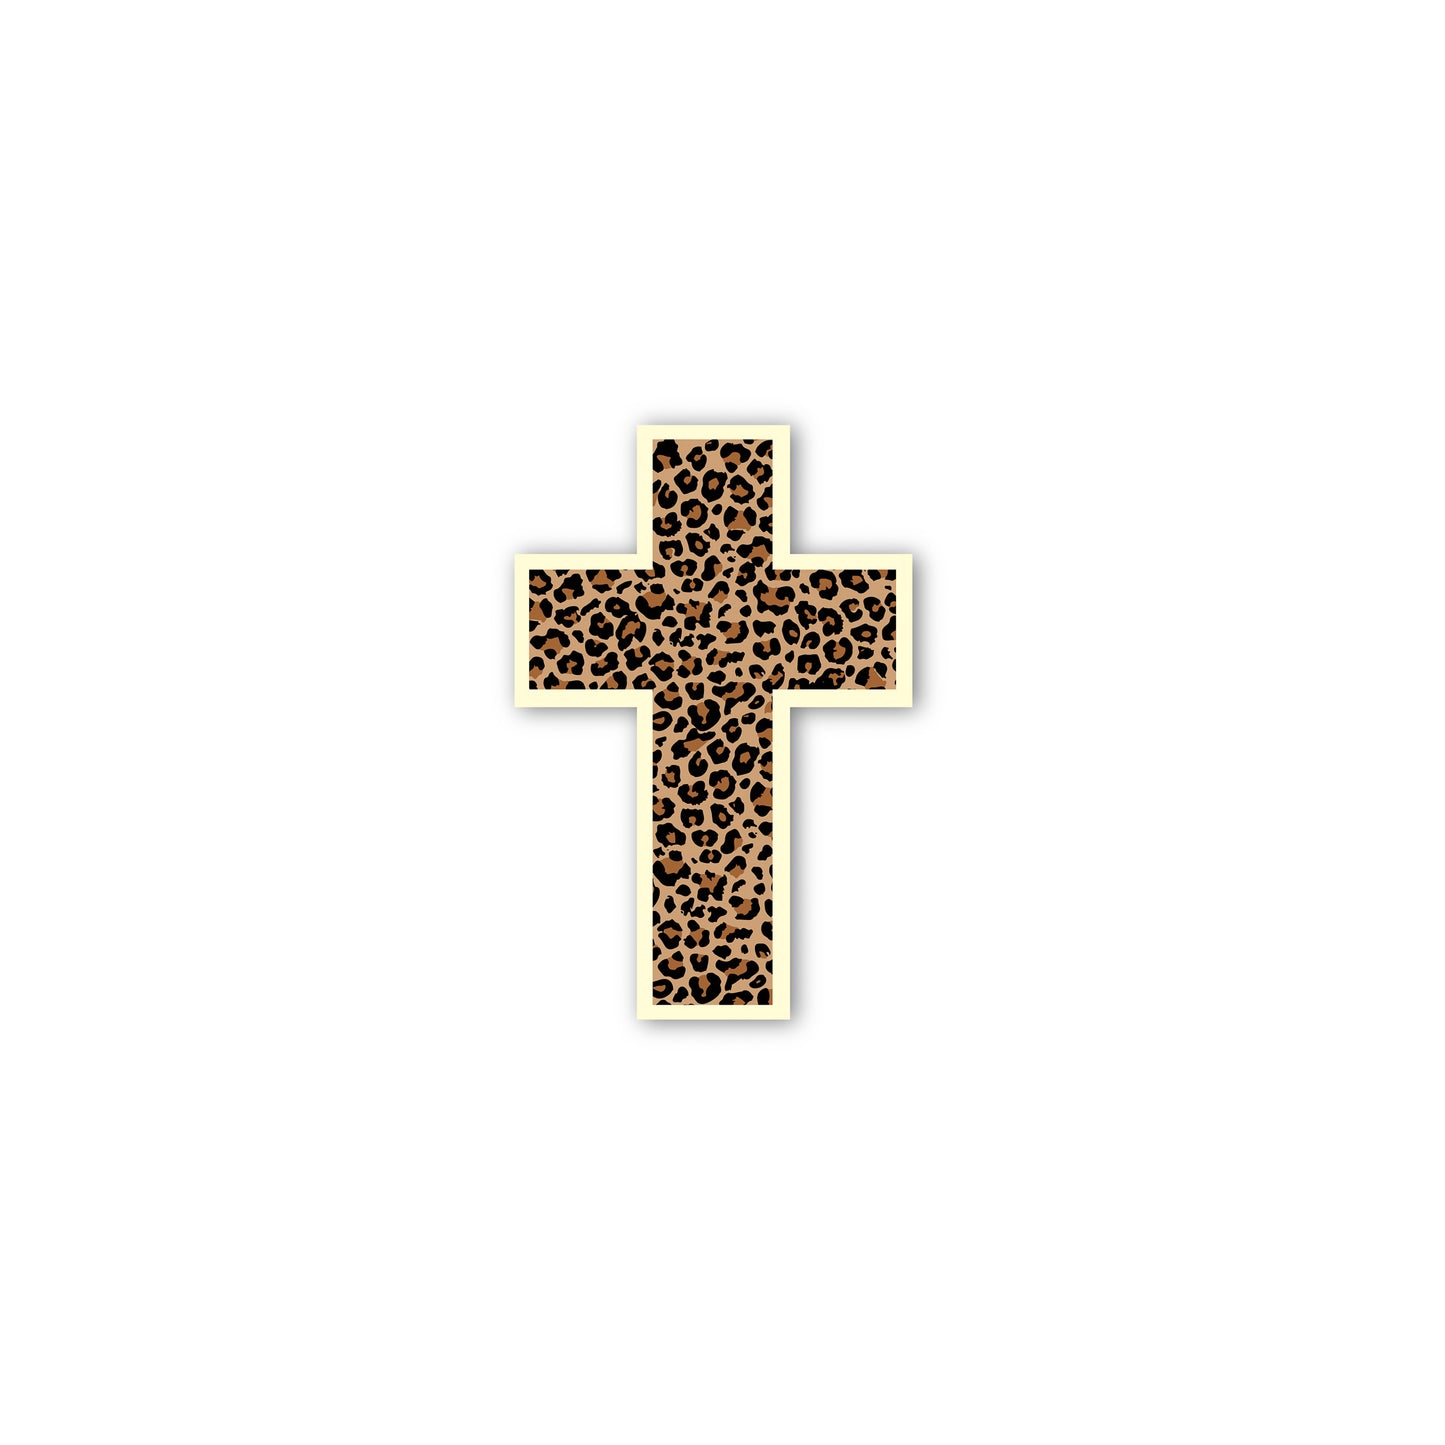 Cheetah Cross - Decal